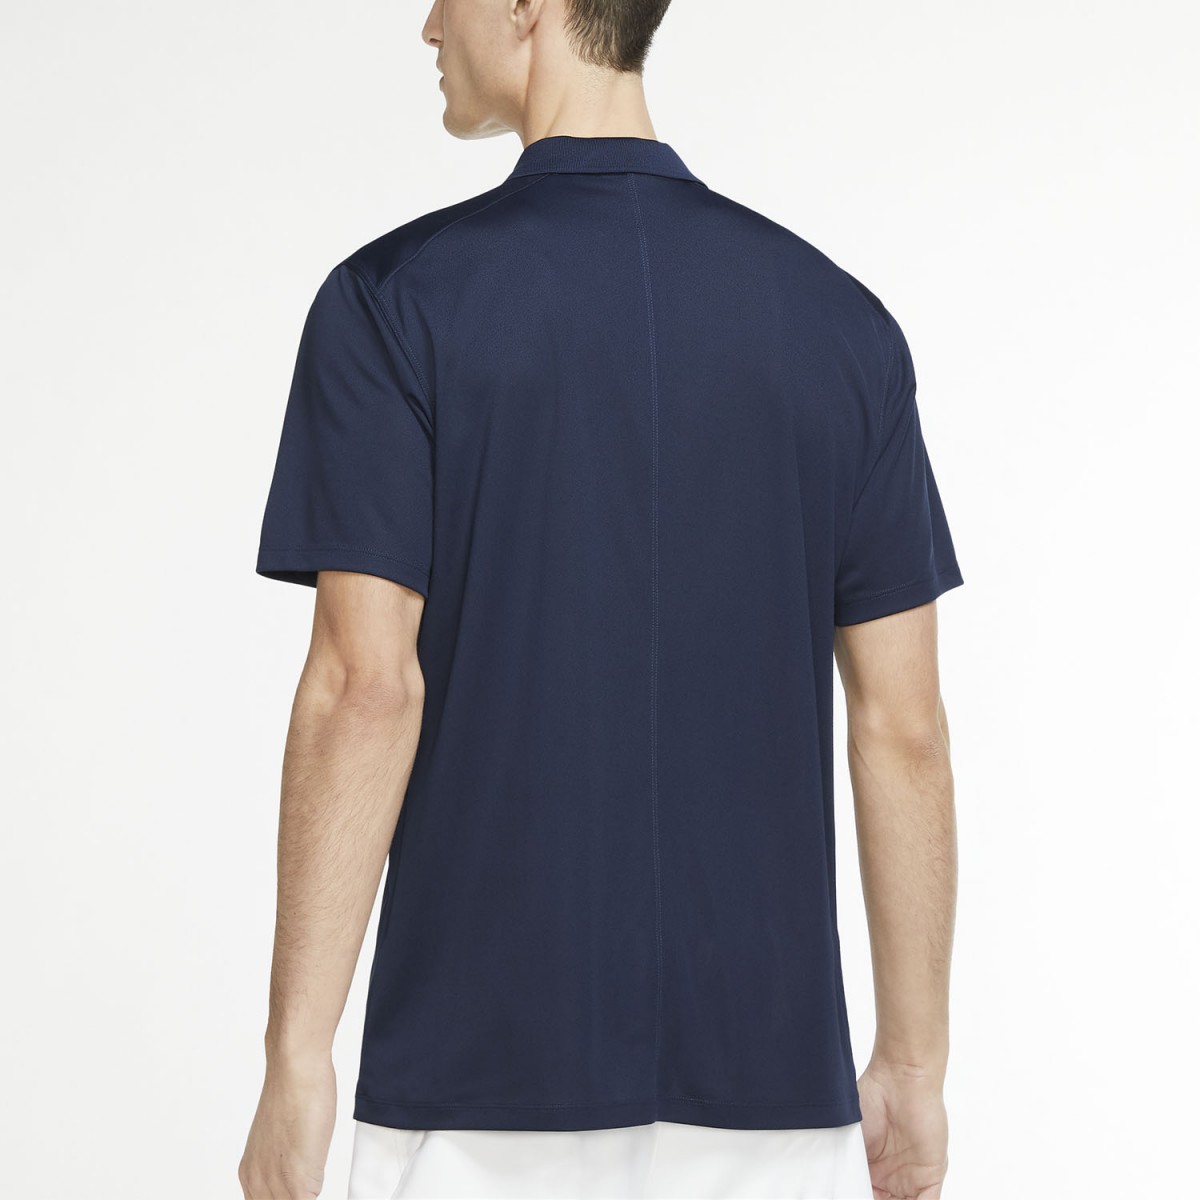 Тенісна футболка чоловіча Nike Core Pique Polo obsidian/white